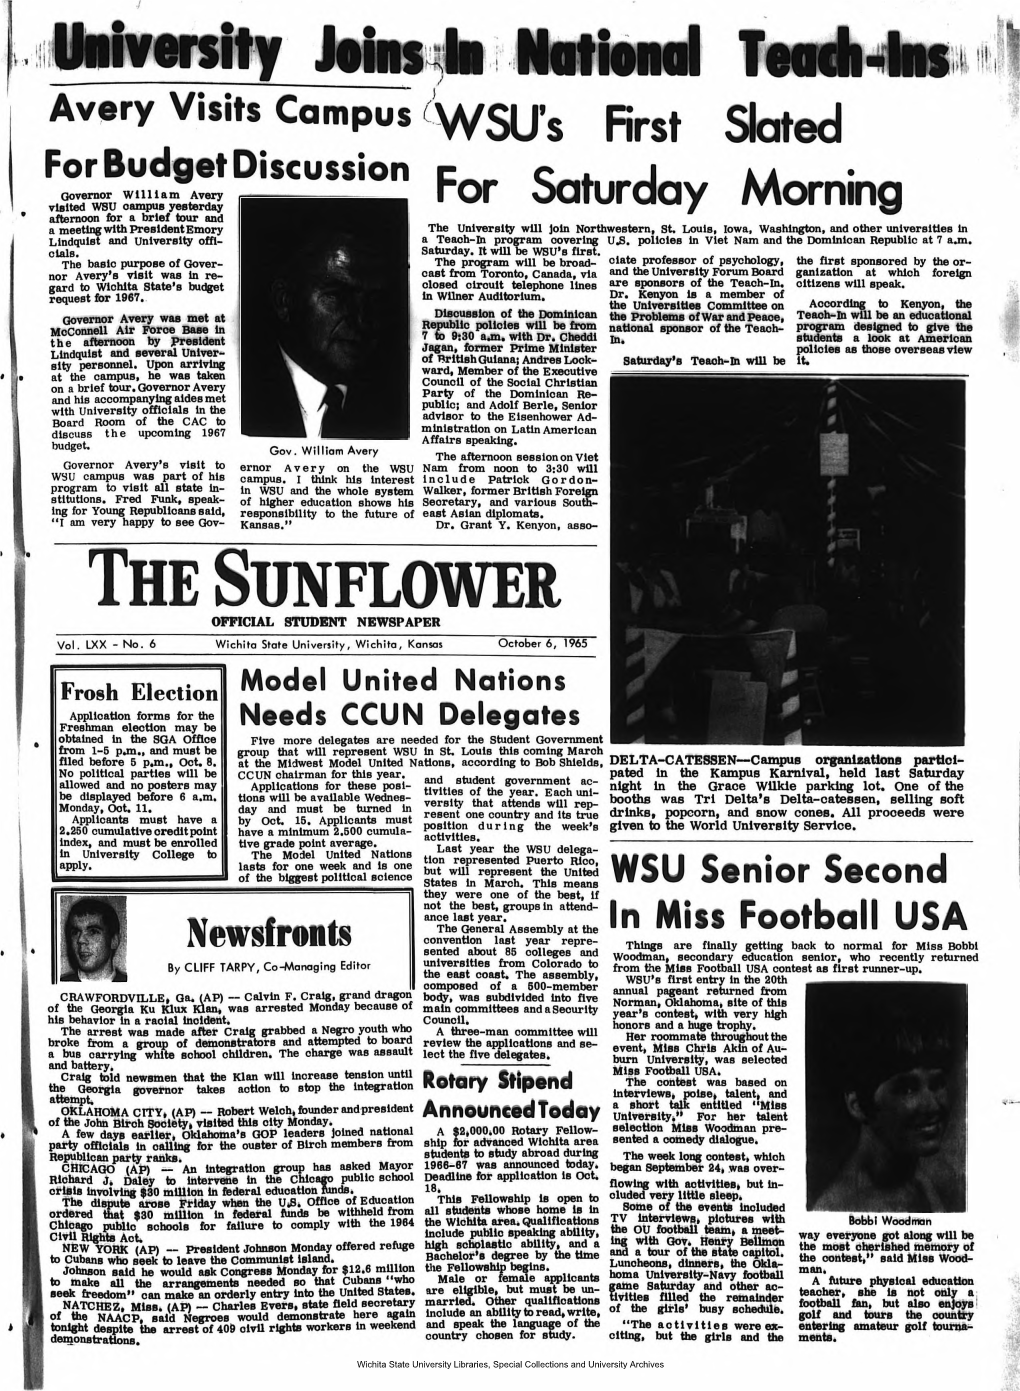 Sunflower 1965-10-06 (3.670Mb)